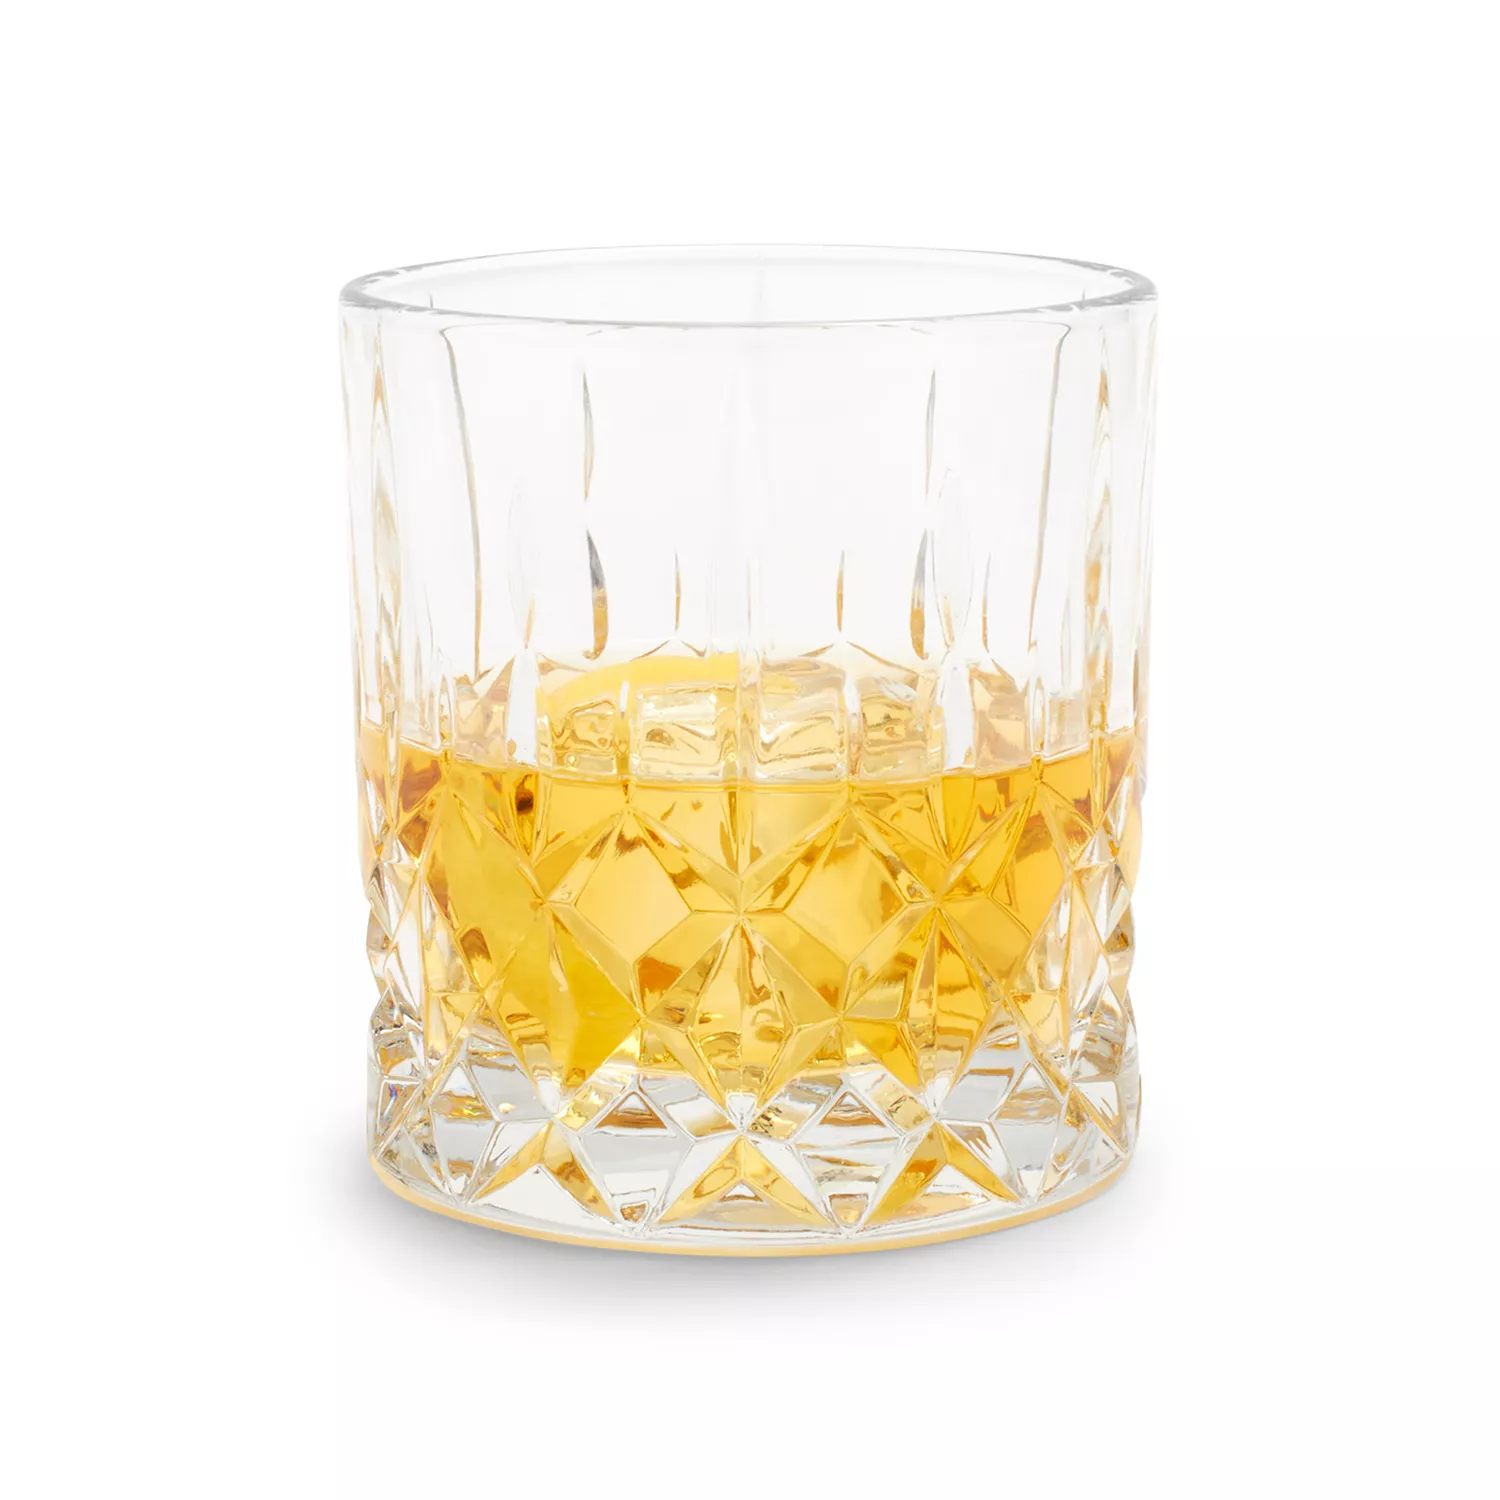 HUAHANGNA Old Fashioned Cocktail Glasses - 9oz Whiskey Tasting Glasses for  Men, Rocks Glasses Set of…See more HUAHANGNA Old Fashioned Cocktail Glasses